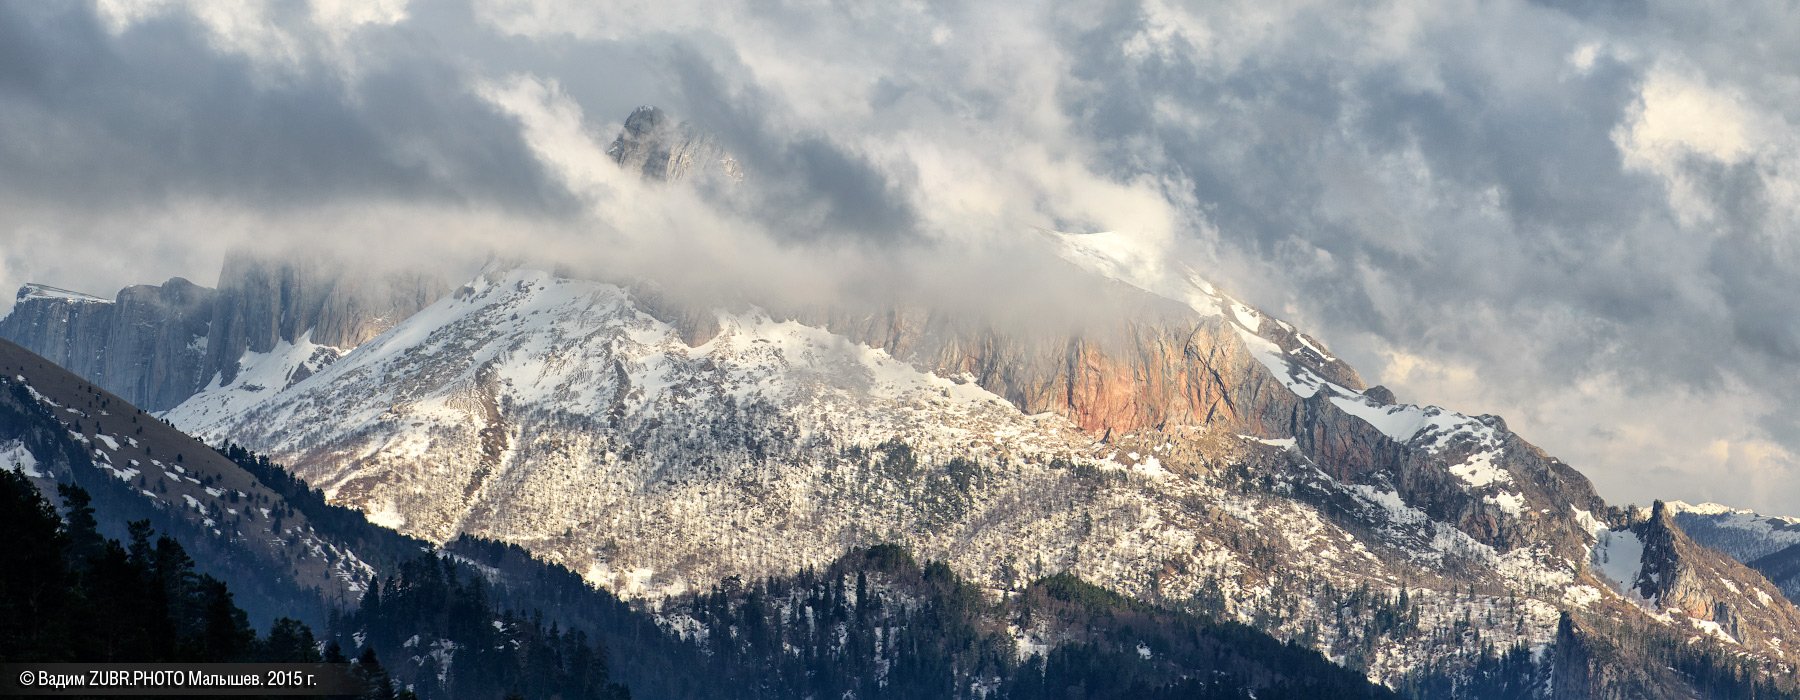 панорама, облака, горы, вечер, закат, снег, zubrphoto, Вадим ZUBR Малышев